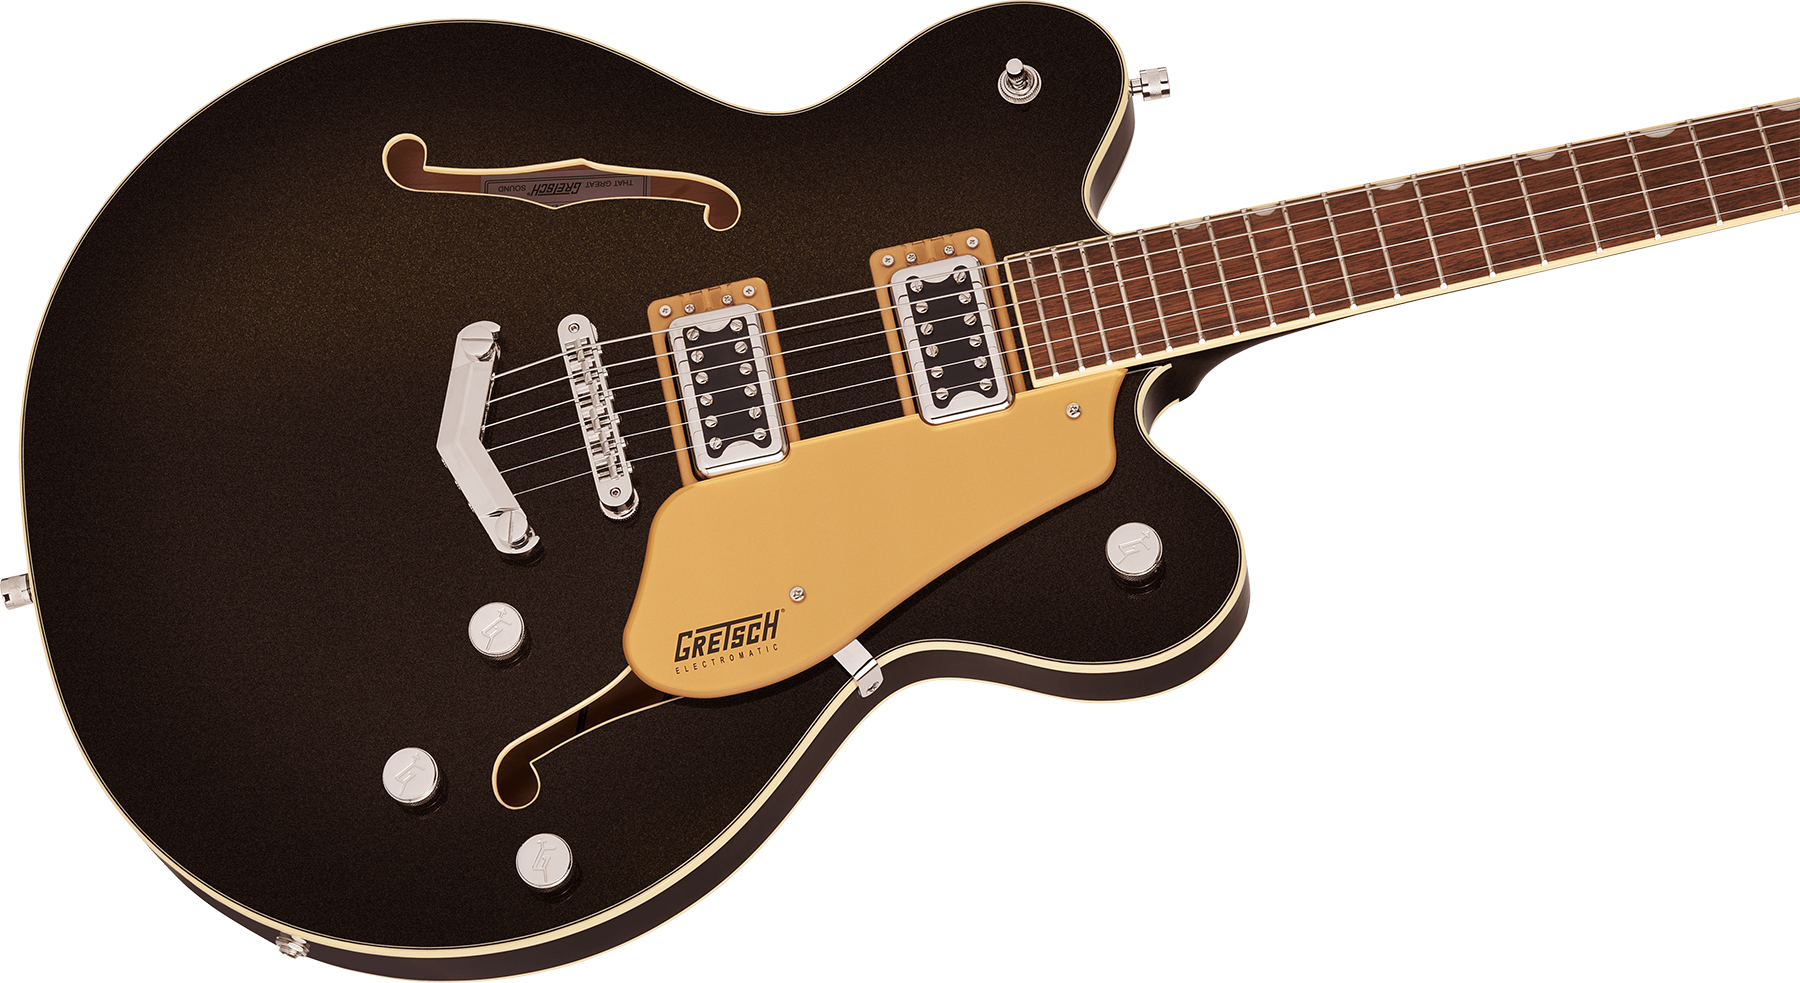 Gretsch G5622 Center Bloc Double Cut V-stoptail Electromatic Hh Ht Lau - Black Gold - Semi-hollow electric guitar - Variation 2